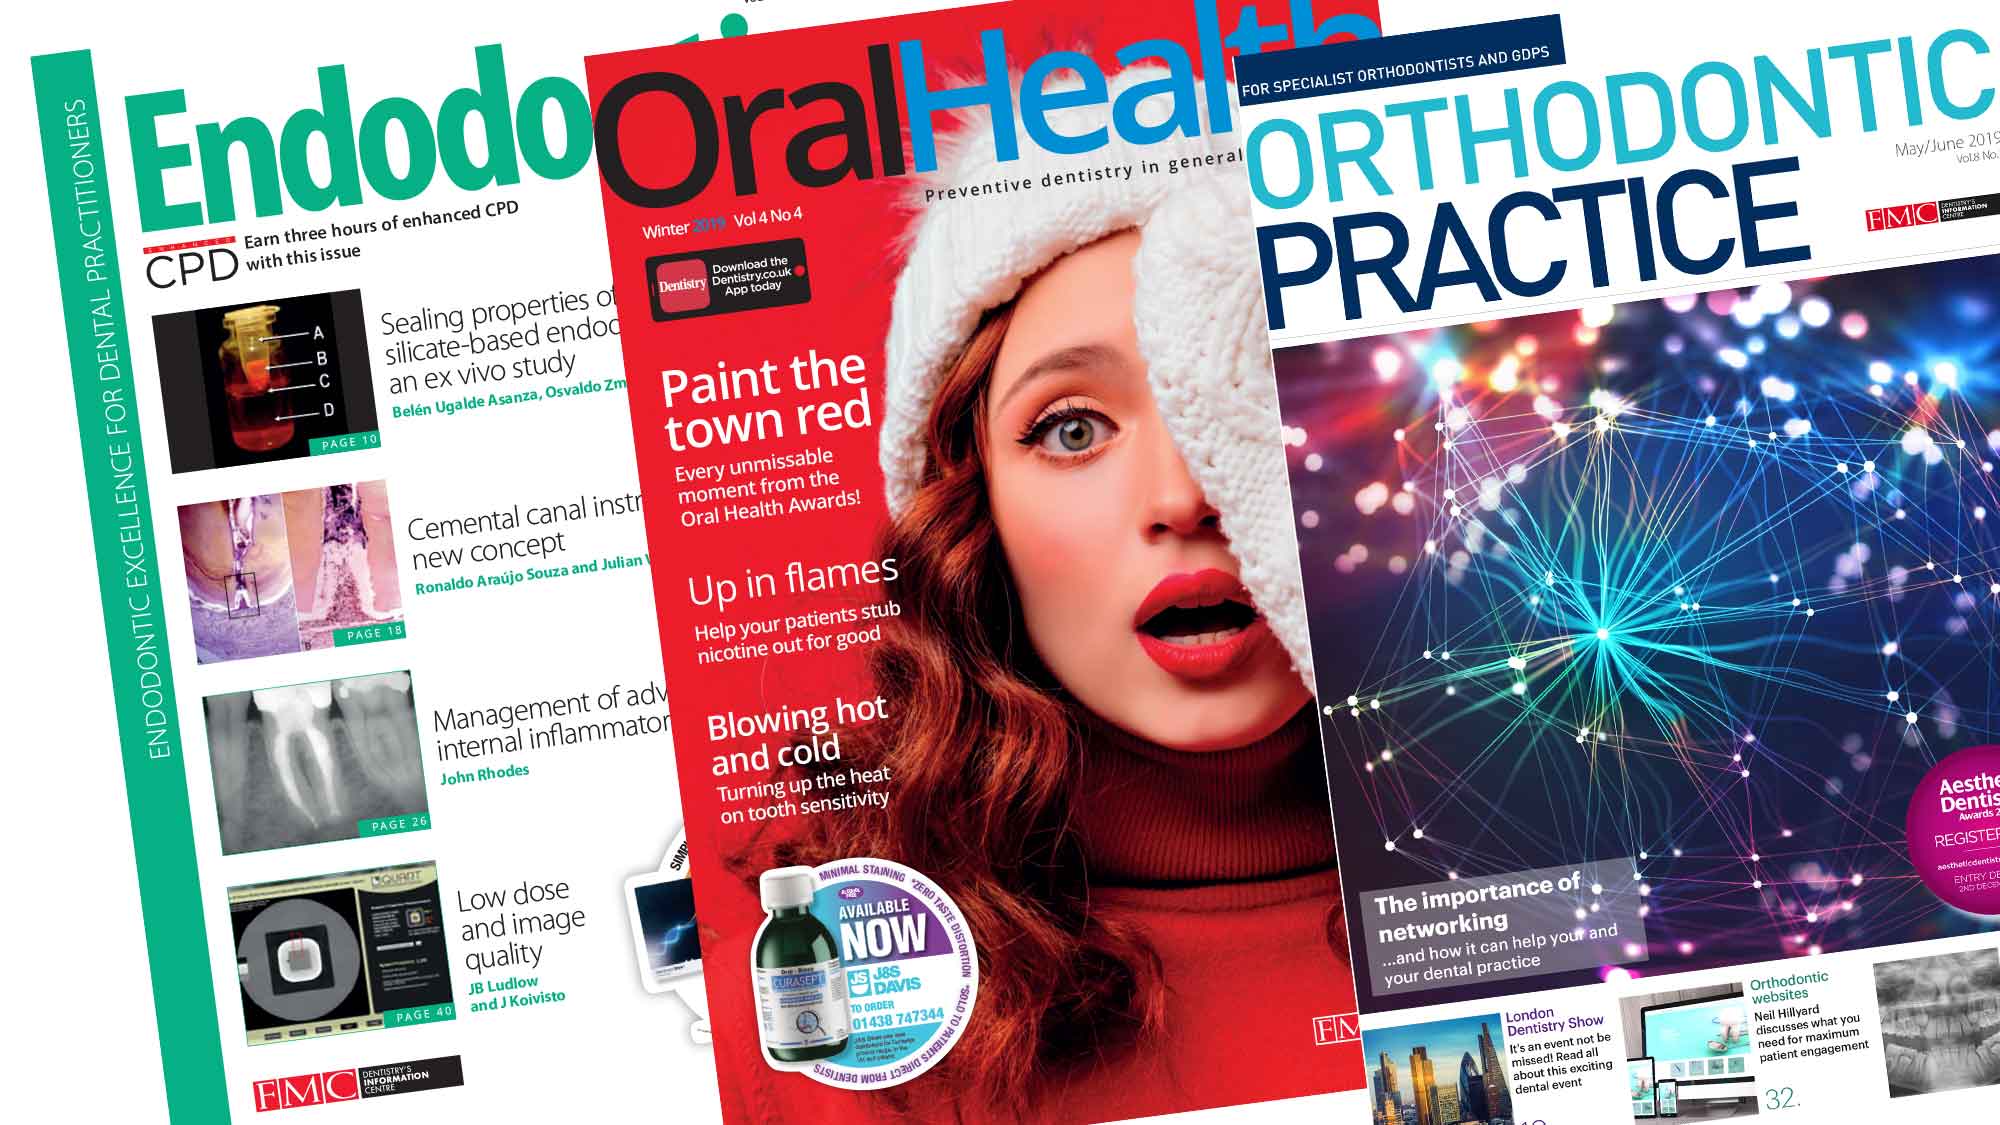 endodontic practice, oral health and orthodontic practice magazines